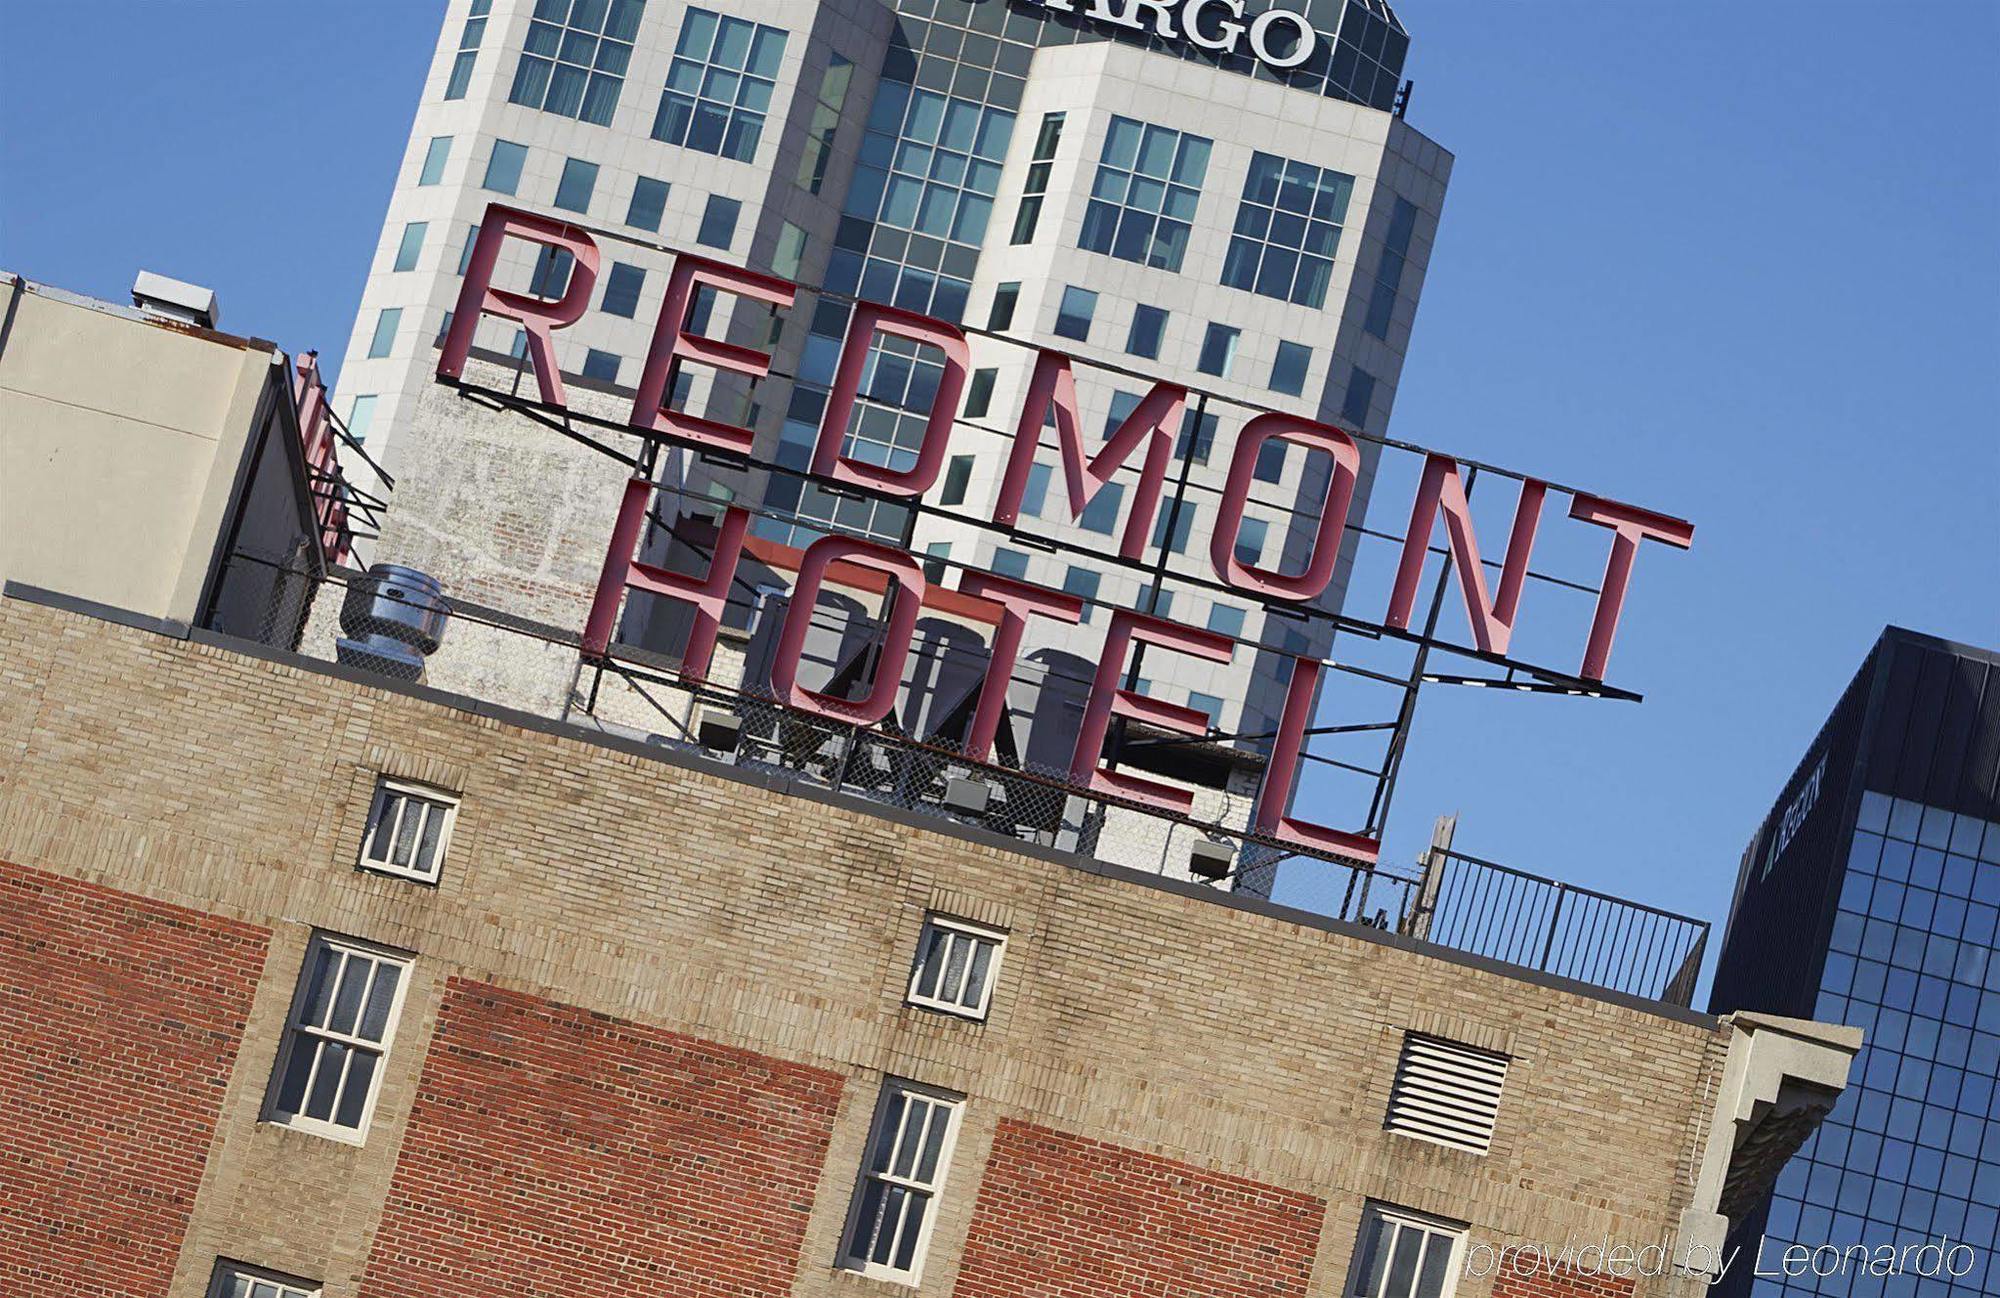 Redmont Hotel Birmingham - Curio Collection By Hilton Exterior photo